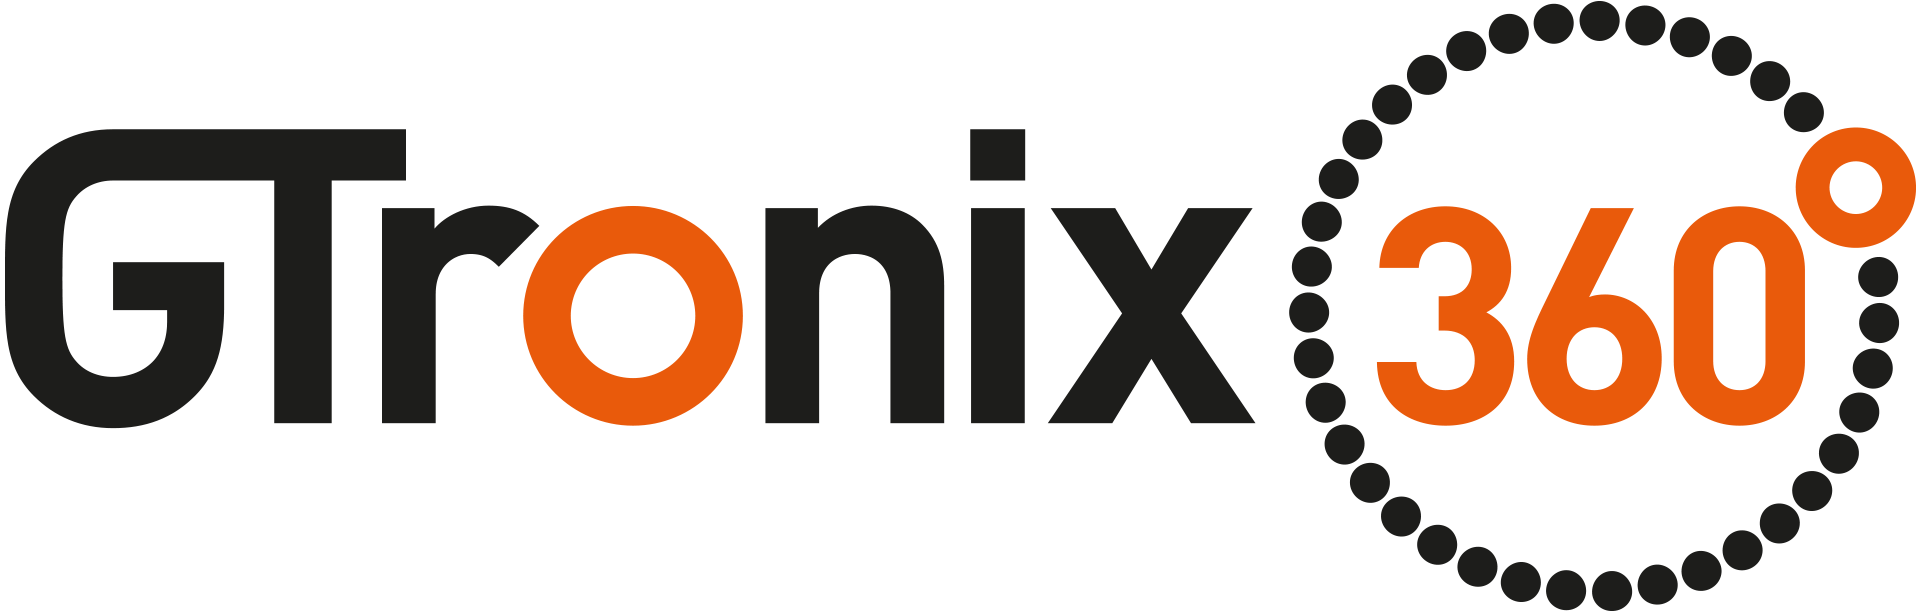 Gtronix360 Logo